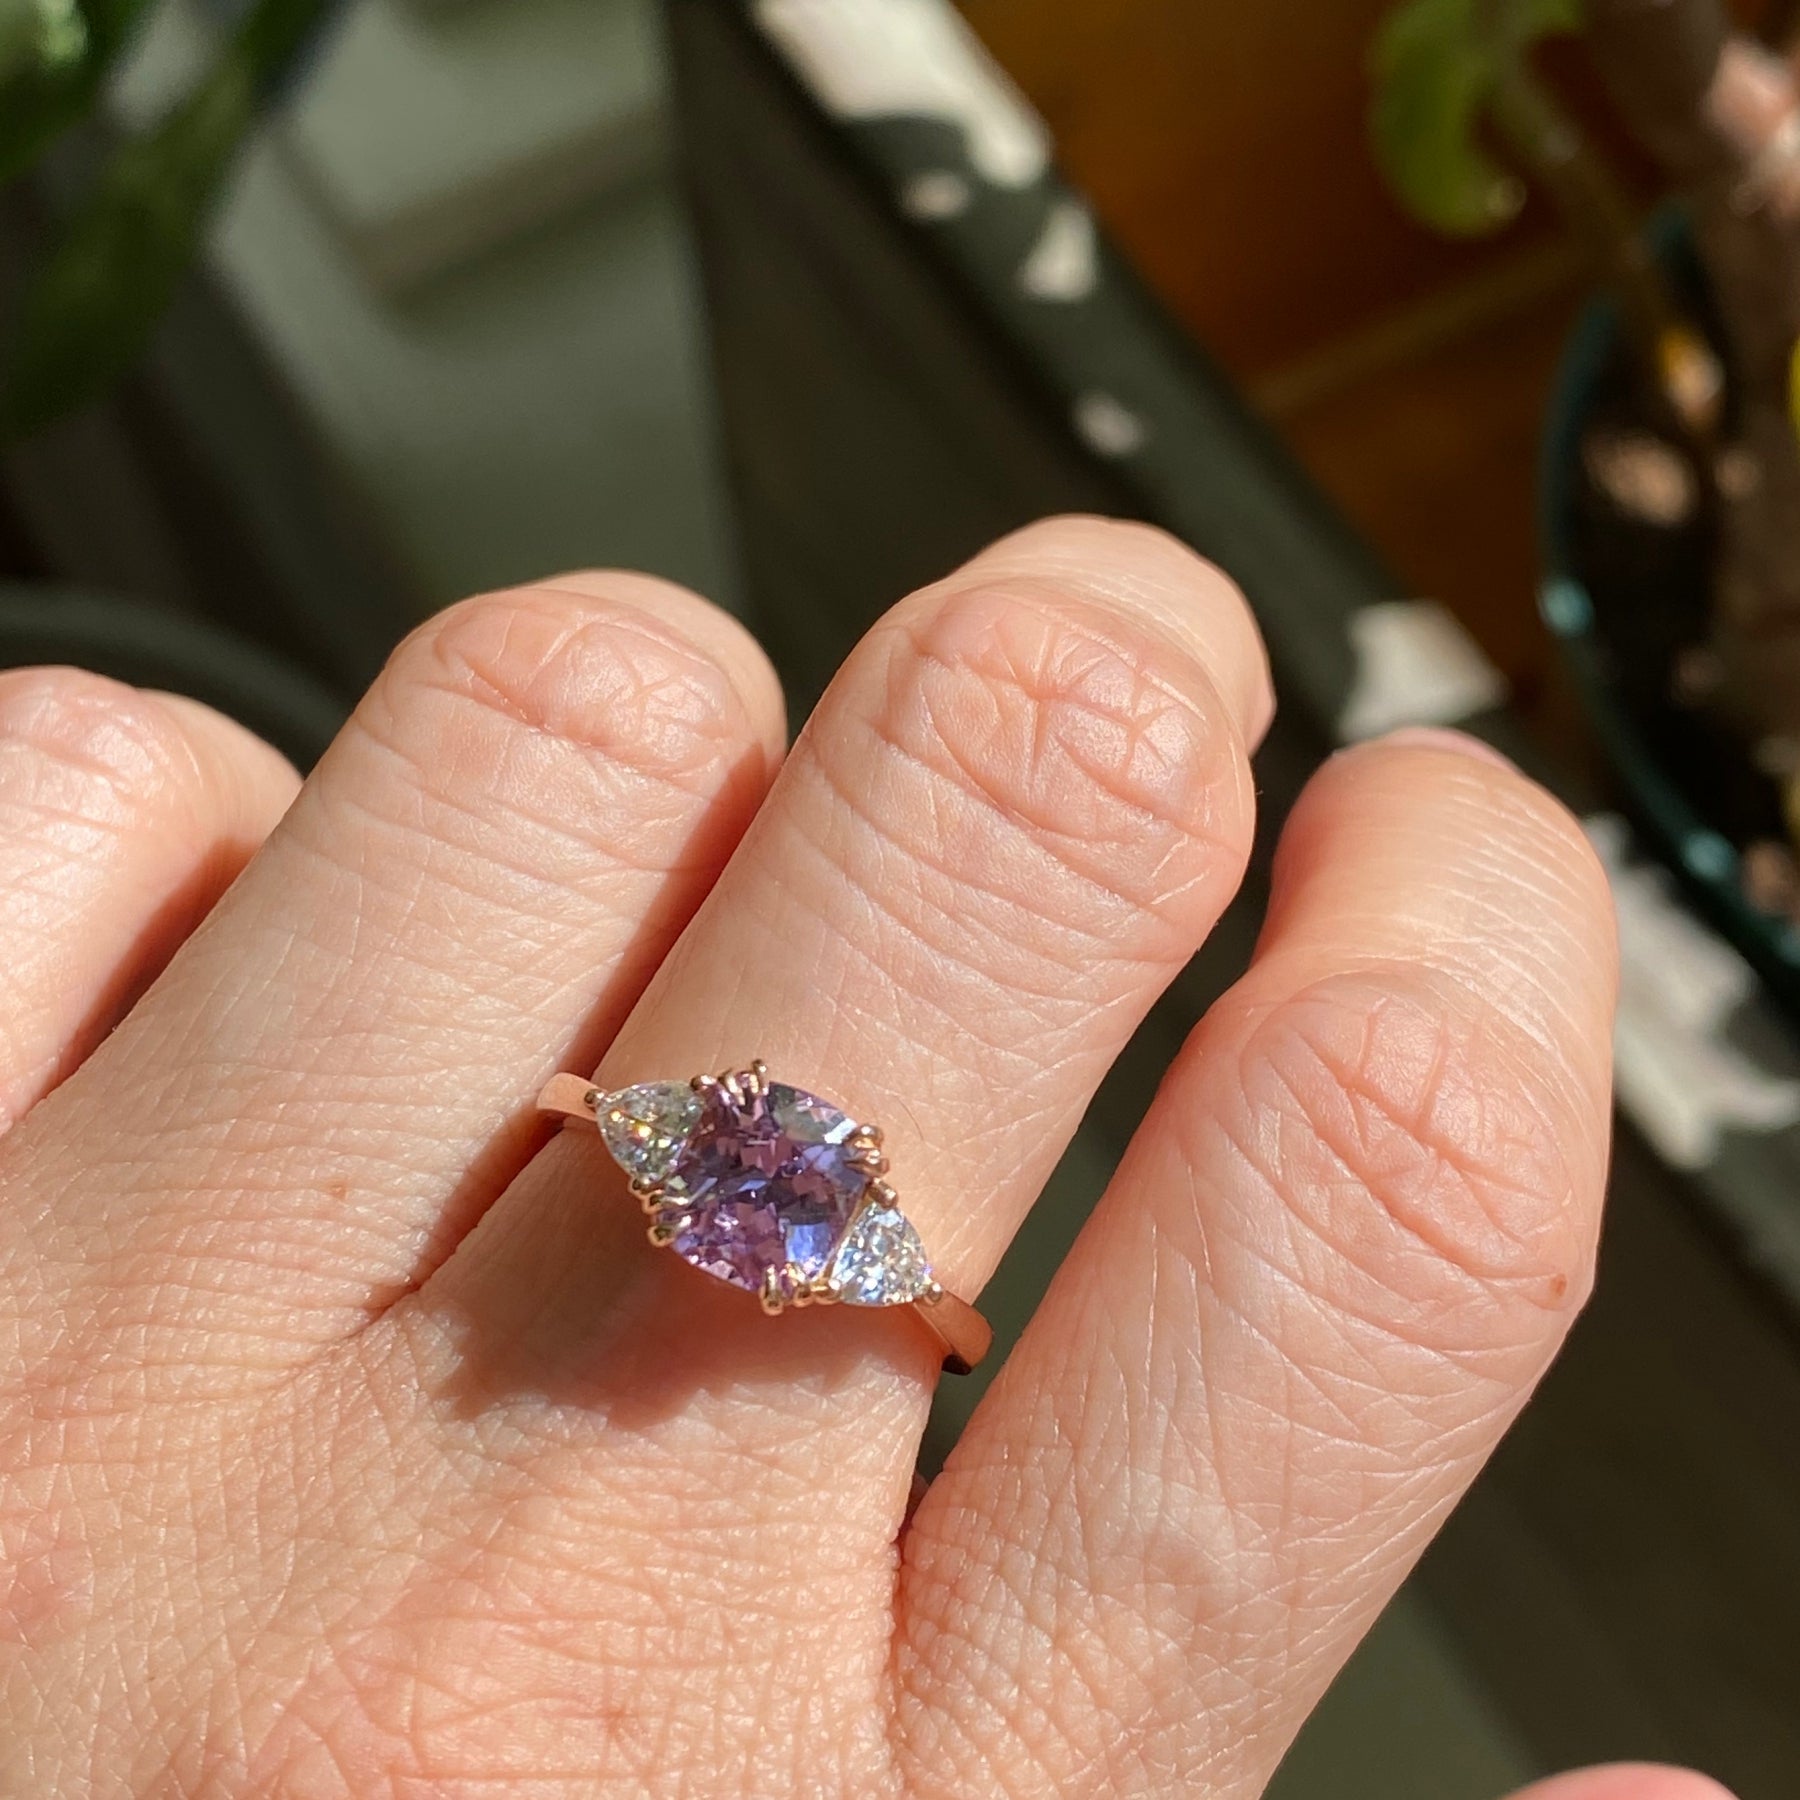 Cushion cut lavender purple sapphire engagement ring rose gold 3 stone ring la more design jewelry